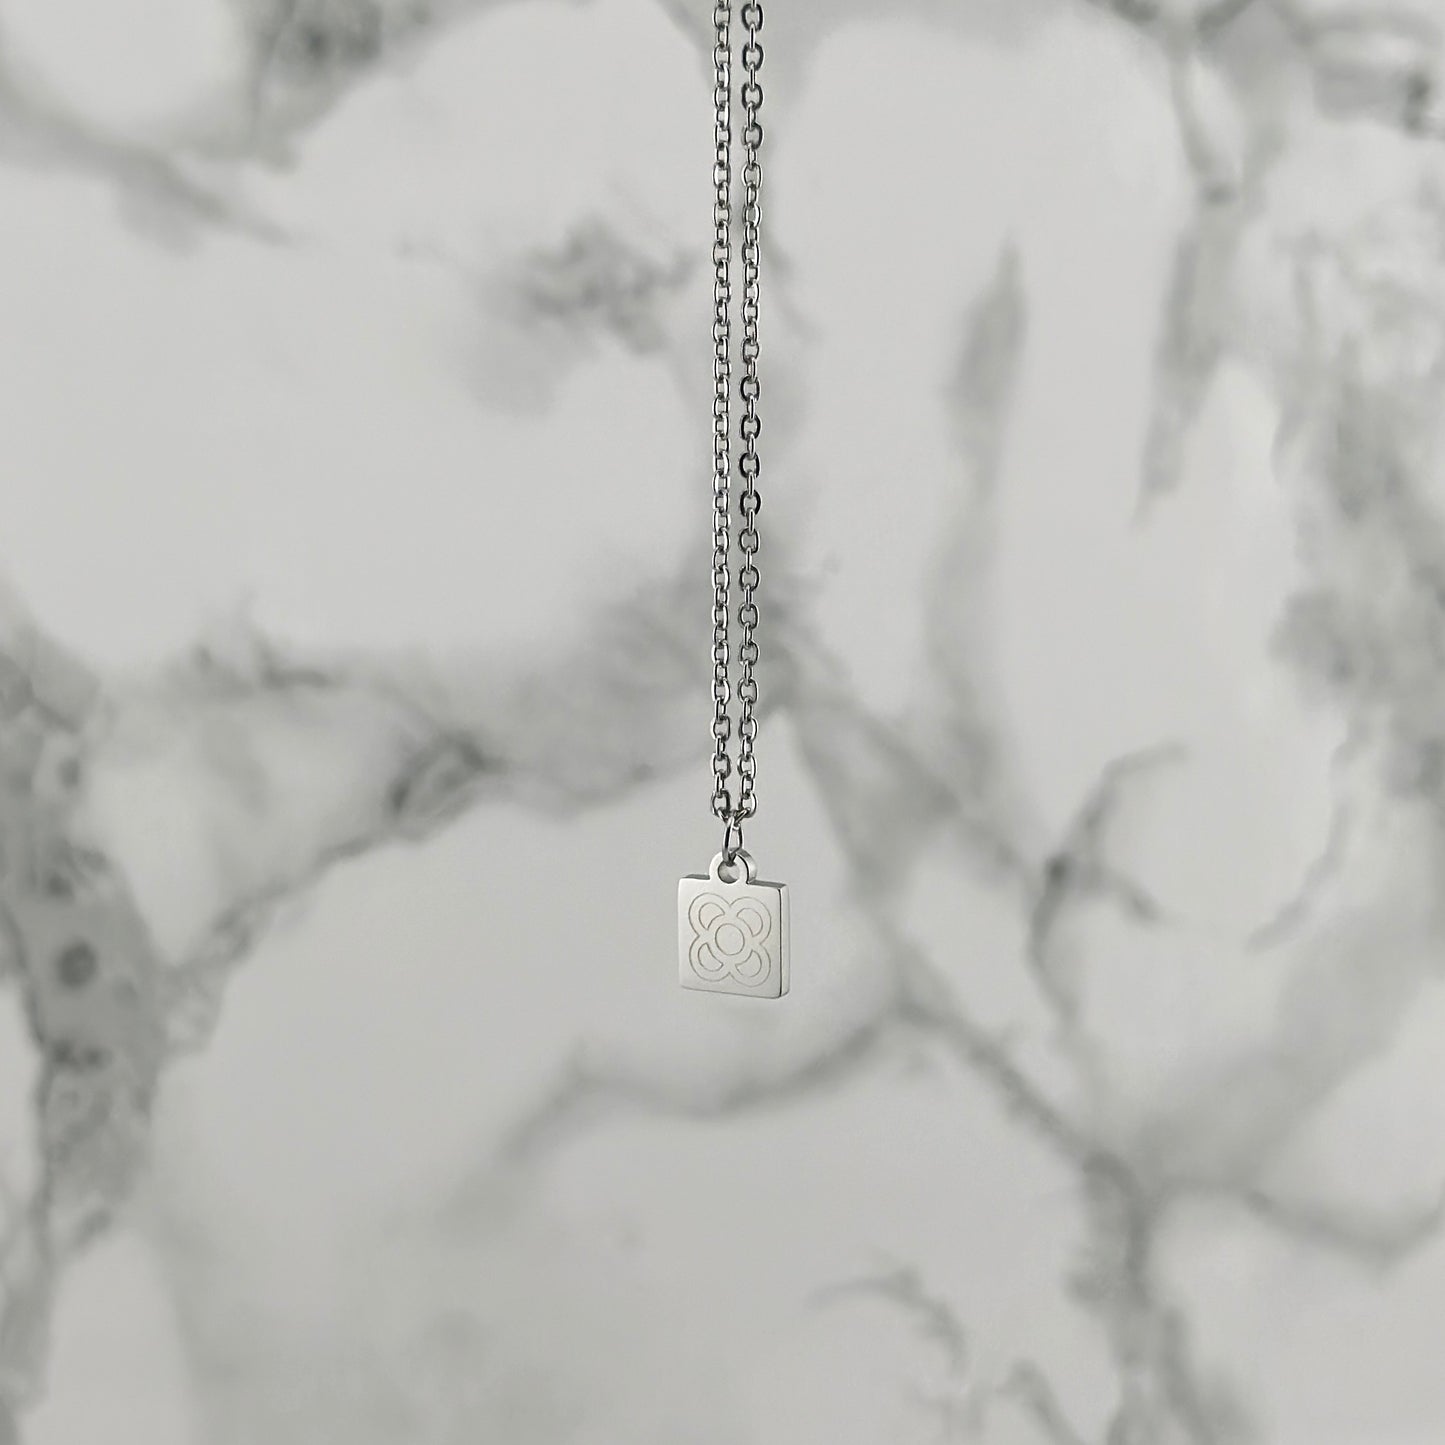 Silver BCN necklace